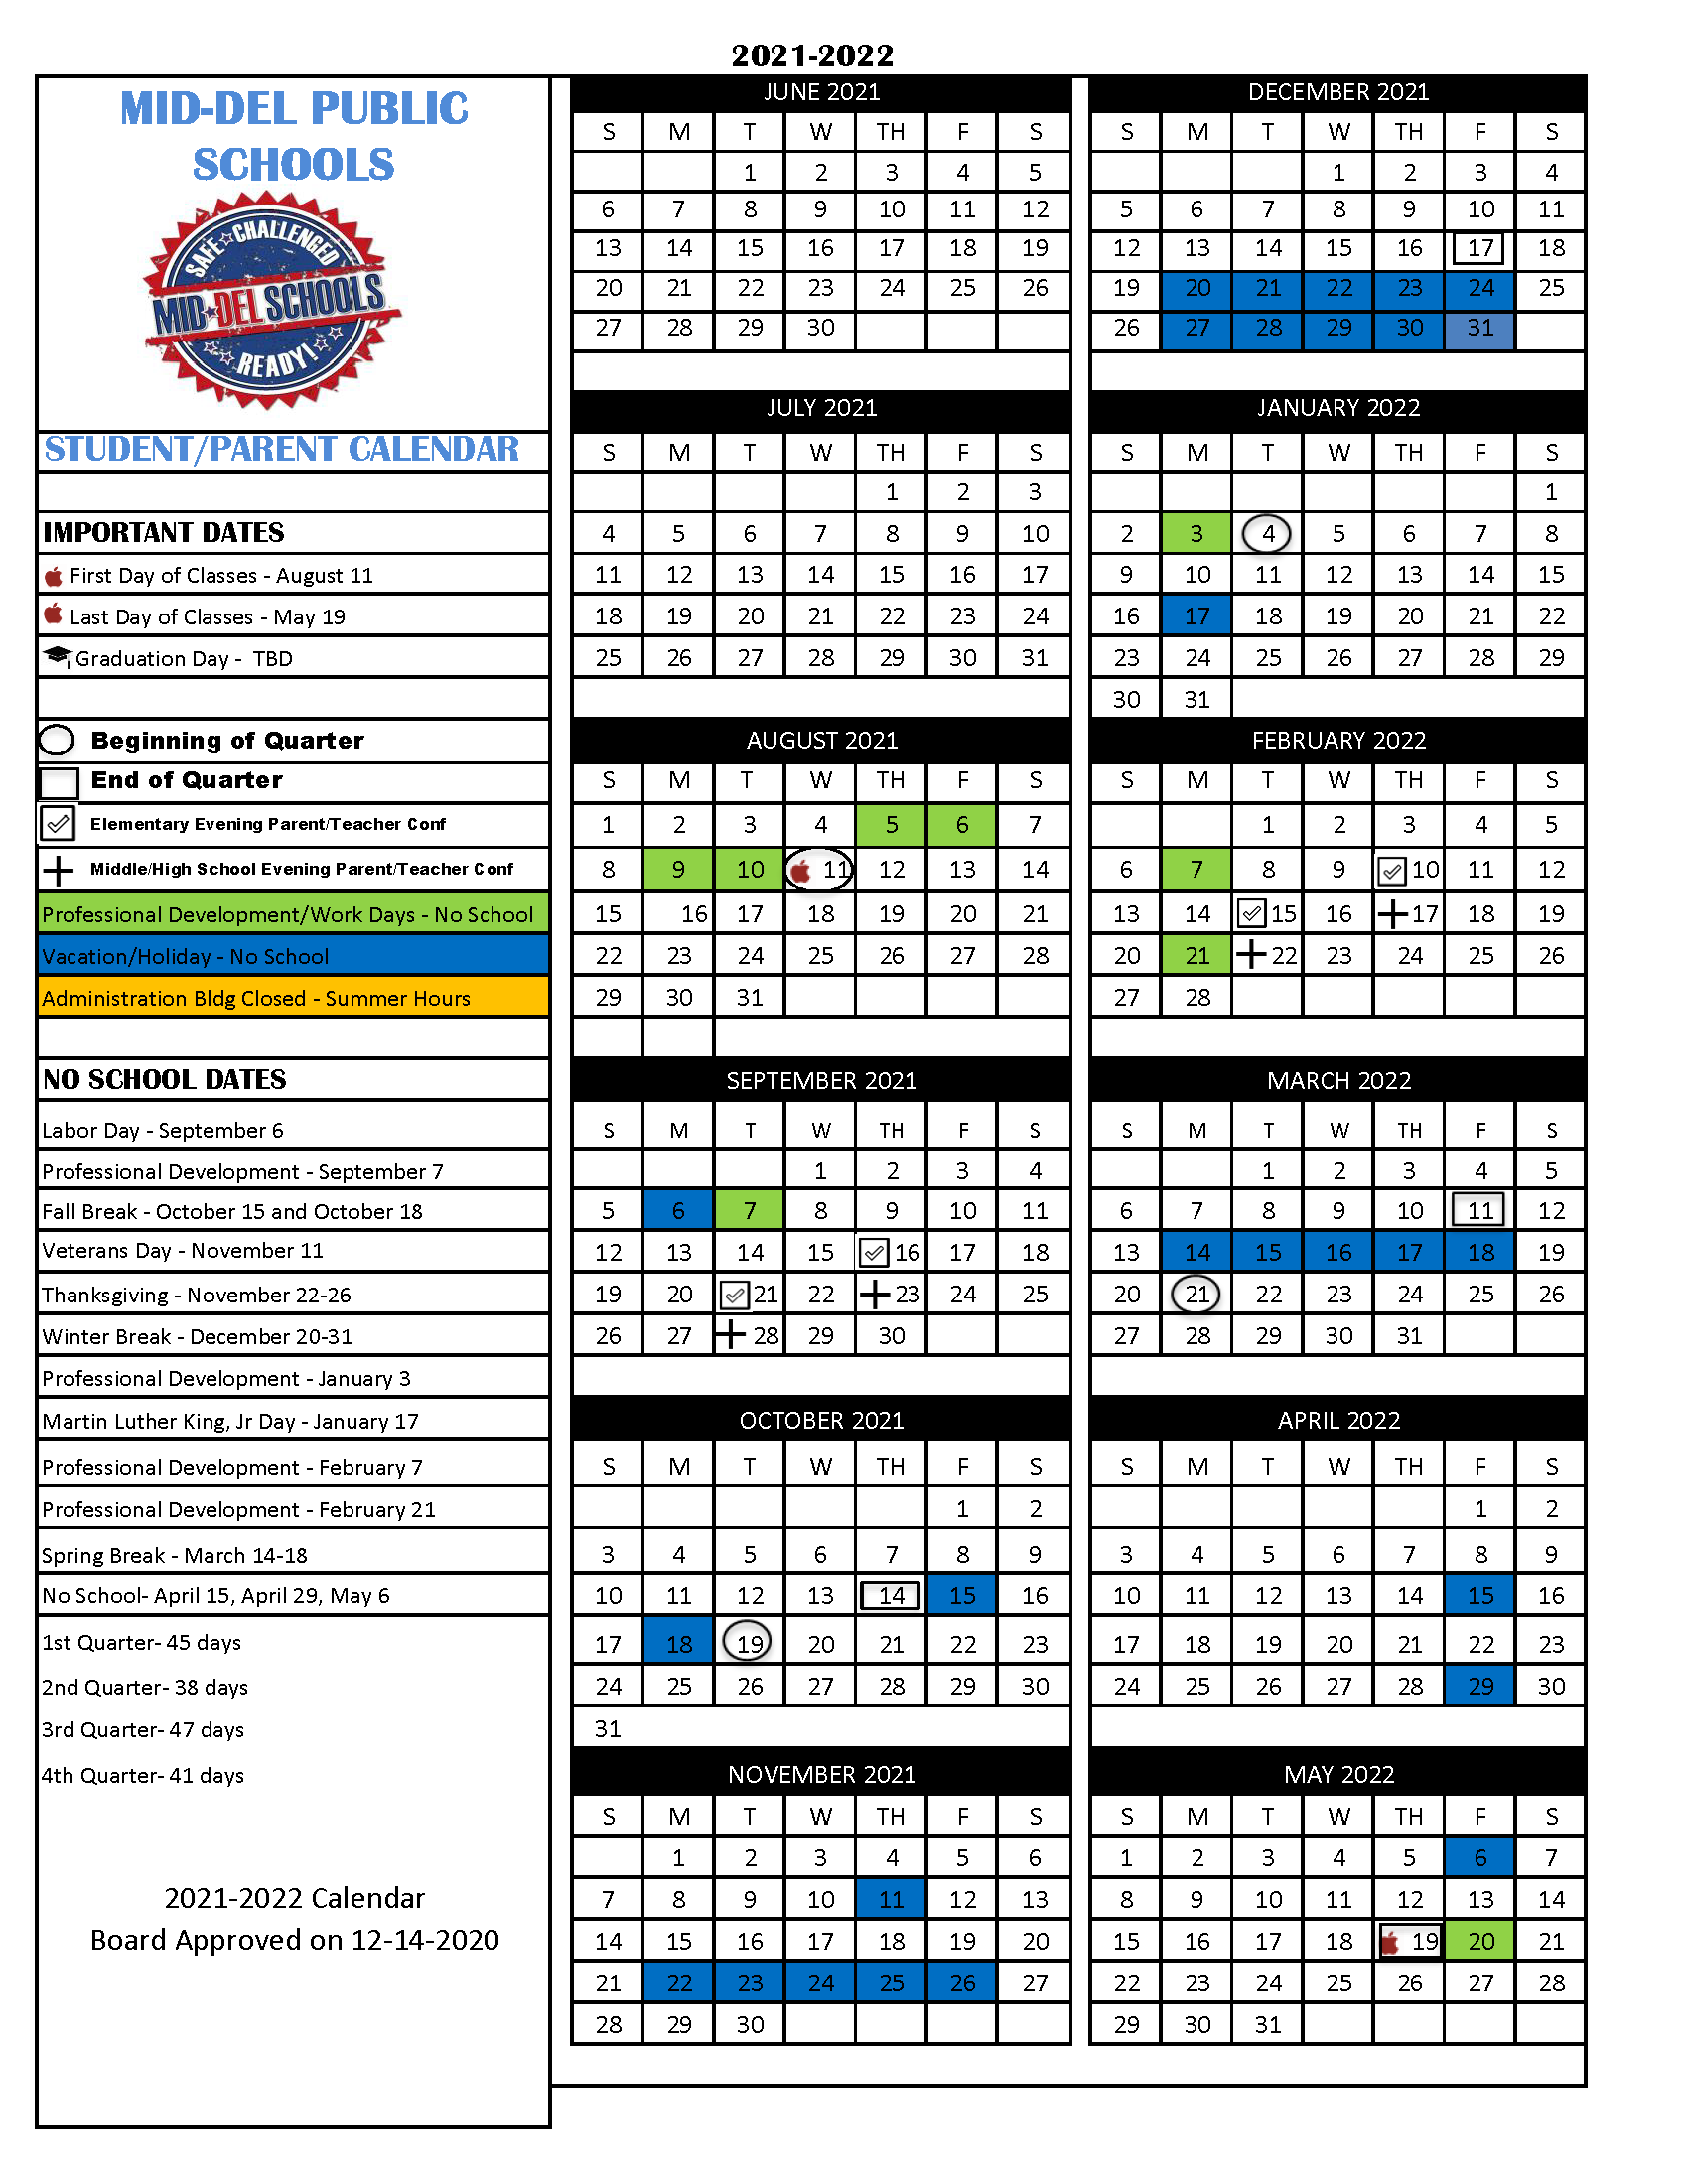 Okstate Academic Calendar Spring 2022 2021-2022 School Calendar | Mid-Del School District